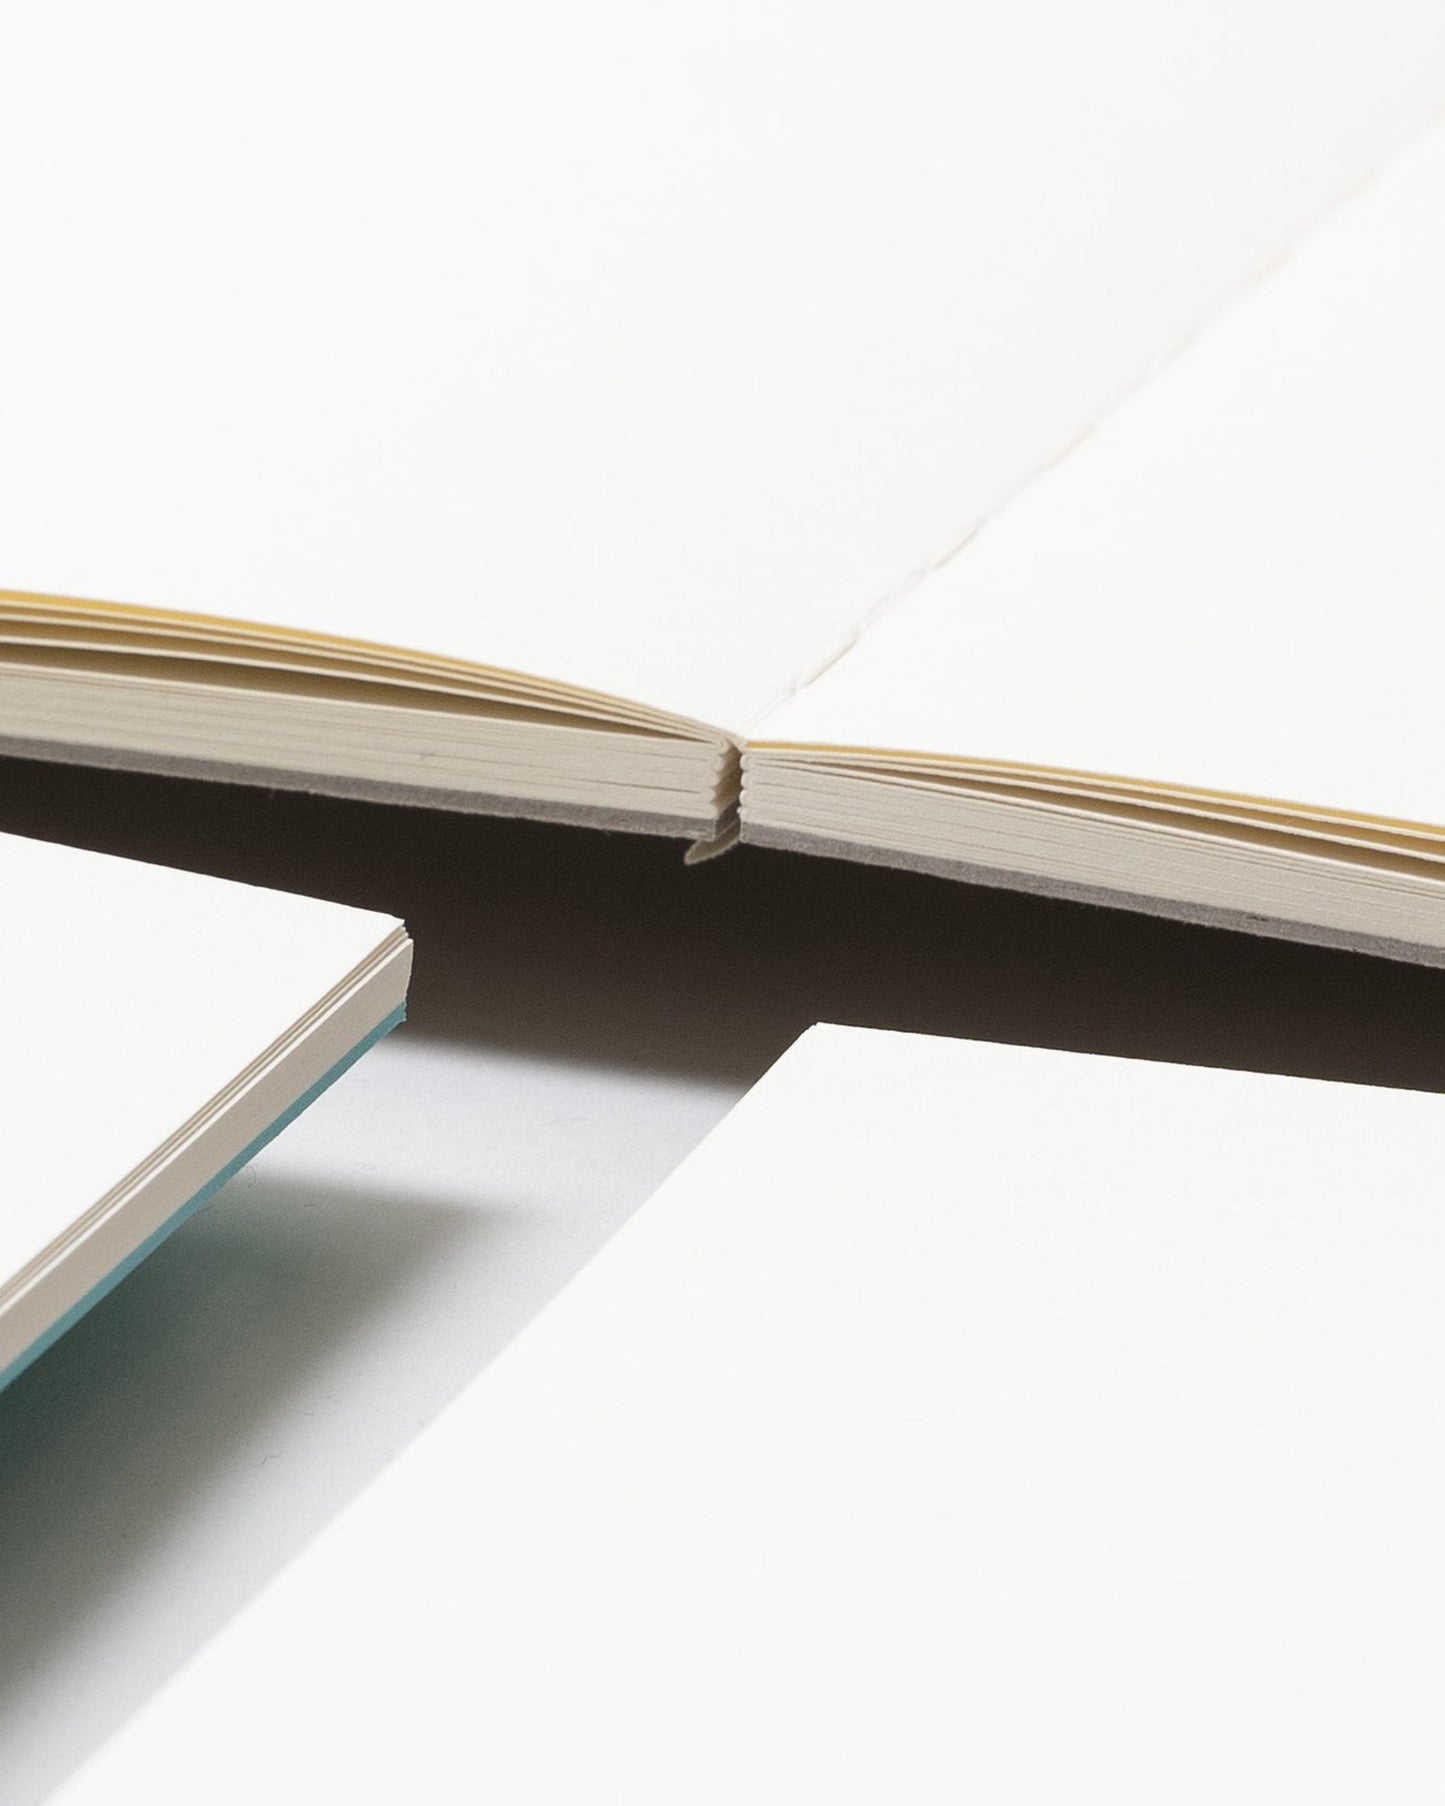 Pith - Yuzu Flex Notebook Soft Gray Blank